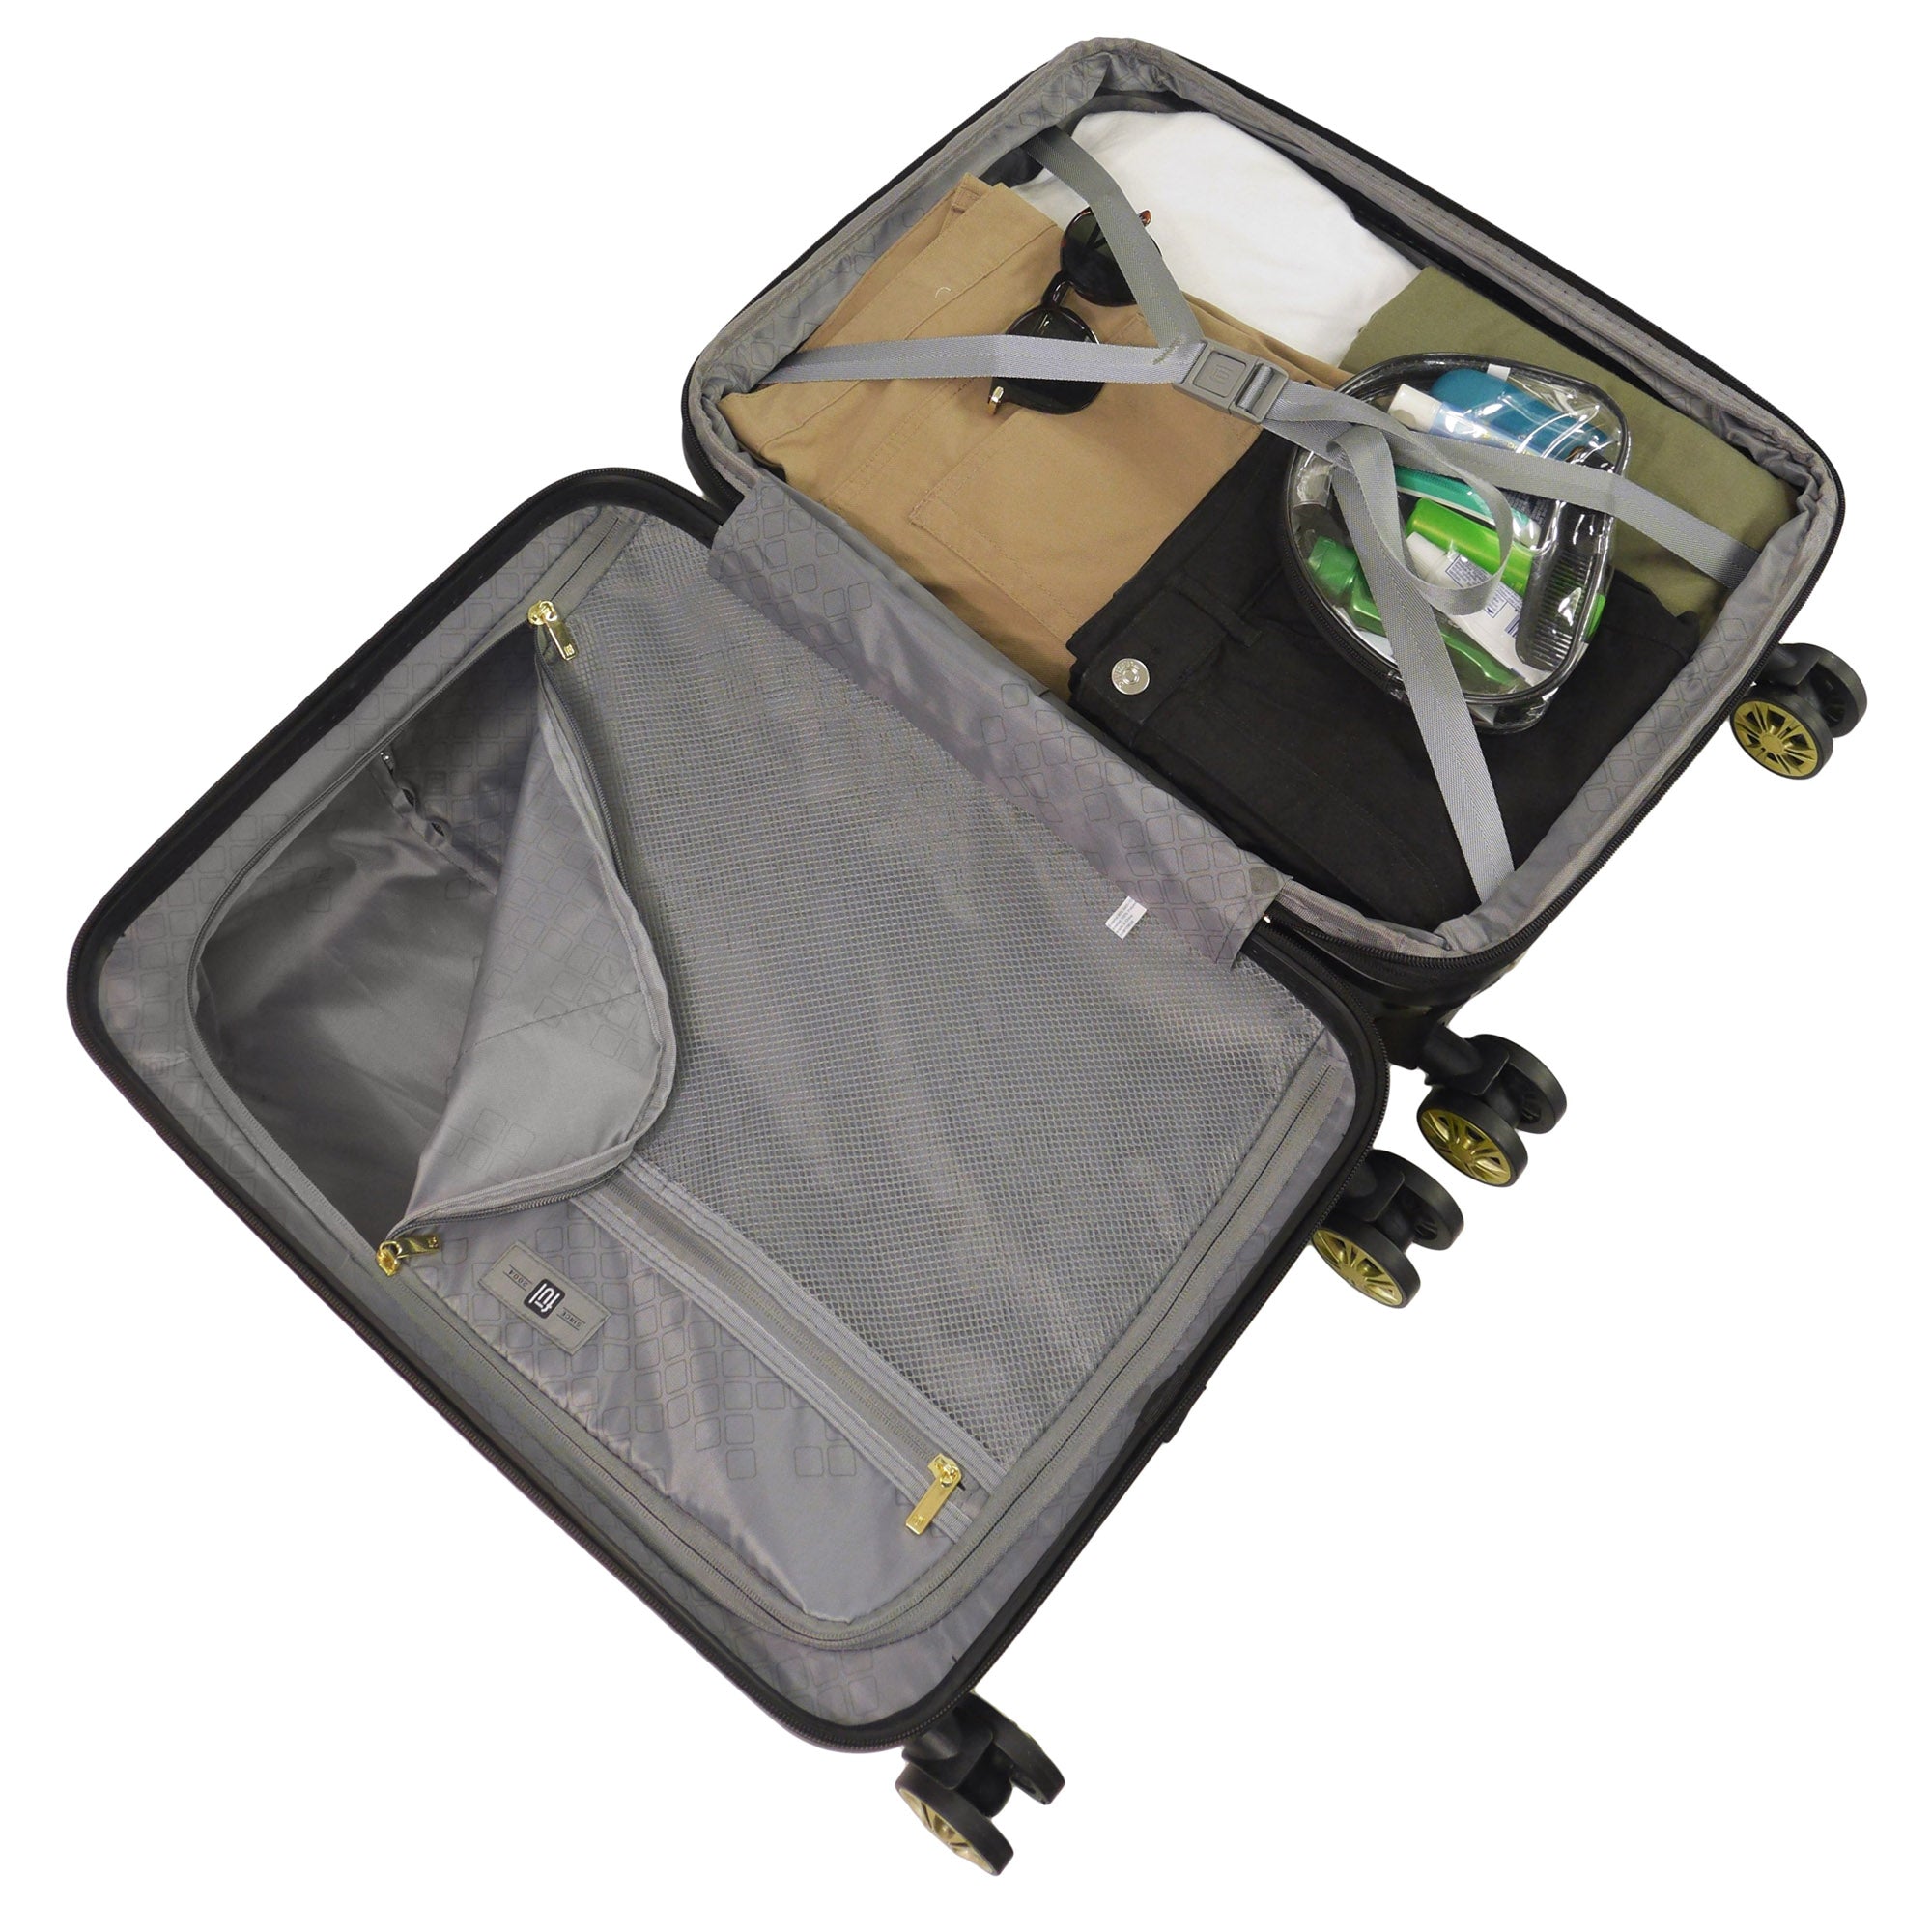 Ful Impulse Mixed Dots 31" Hardside Spinner Suitcase